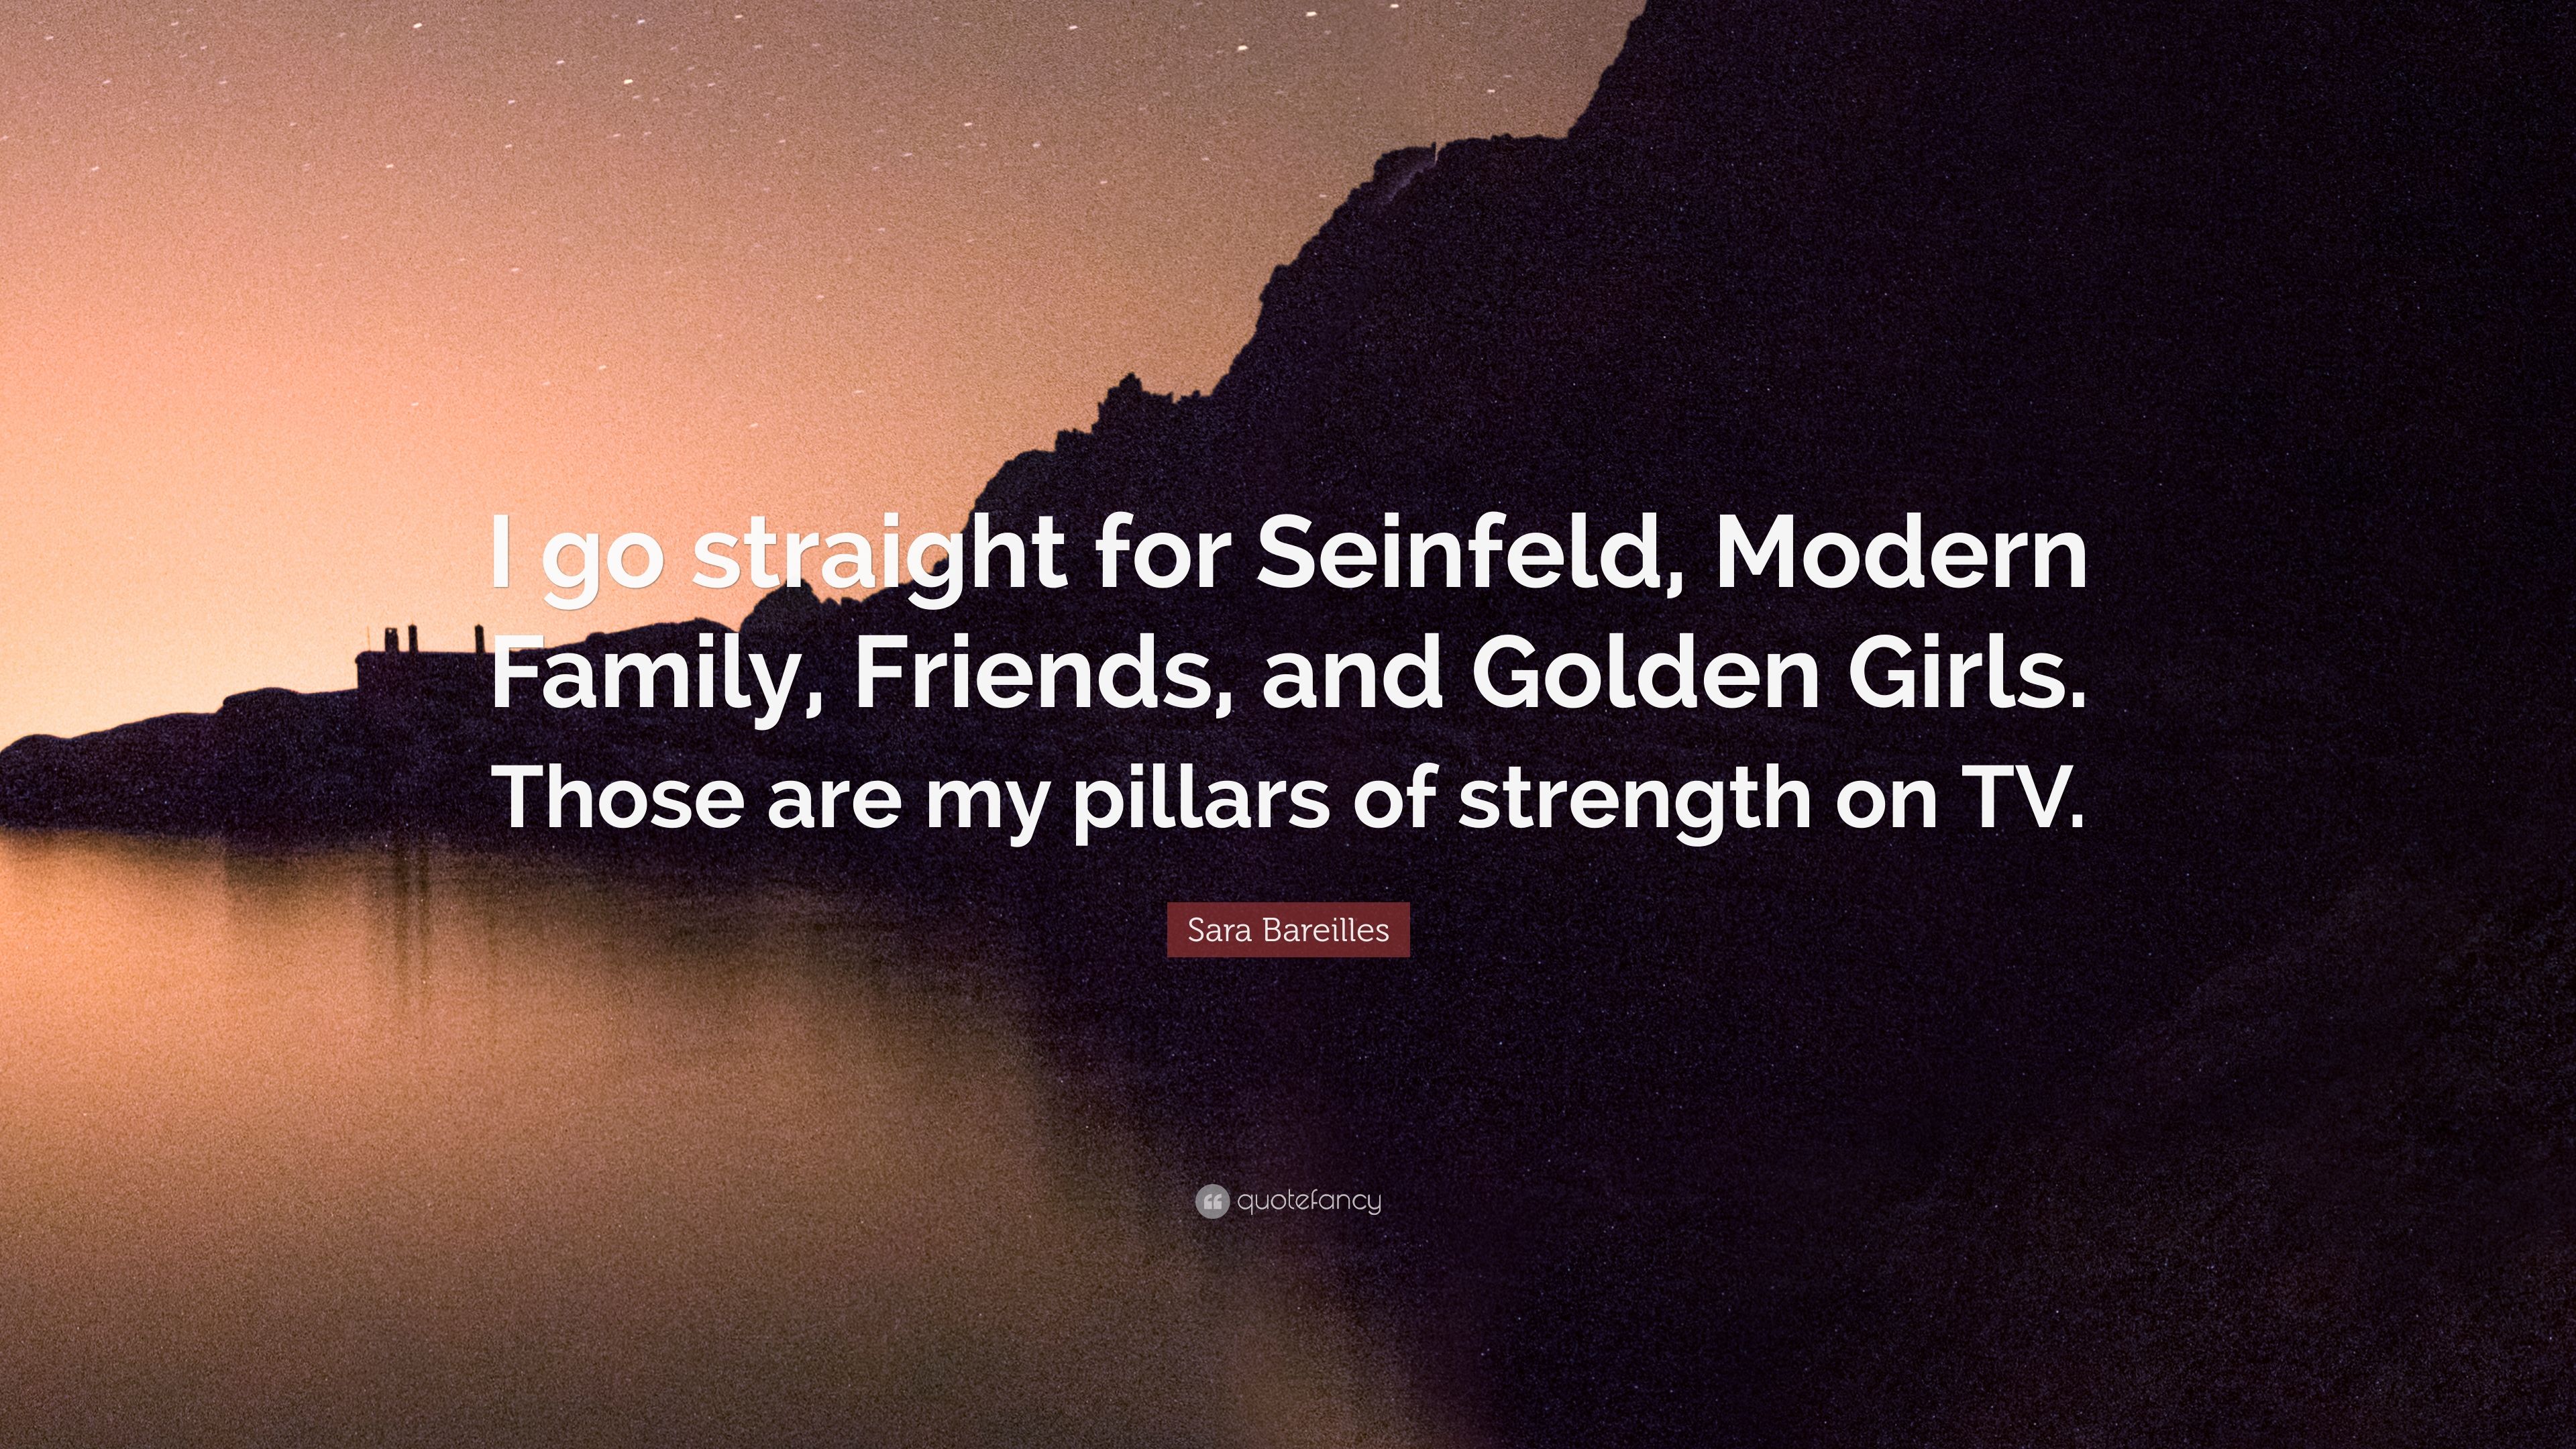 Sara Bareilles Quote: “I go straight for Seinfeld, Modern Family